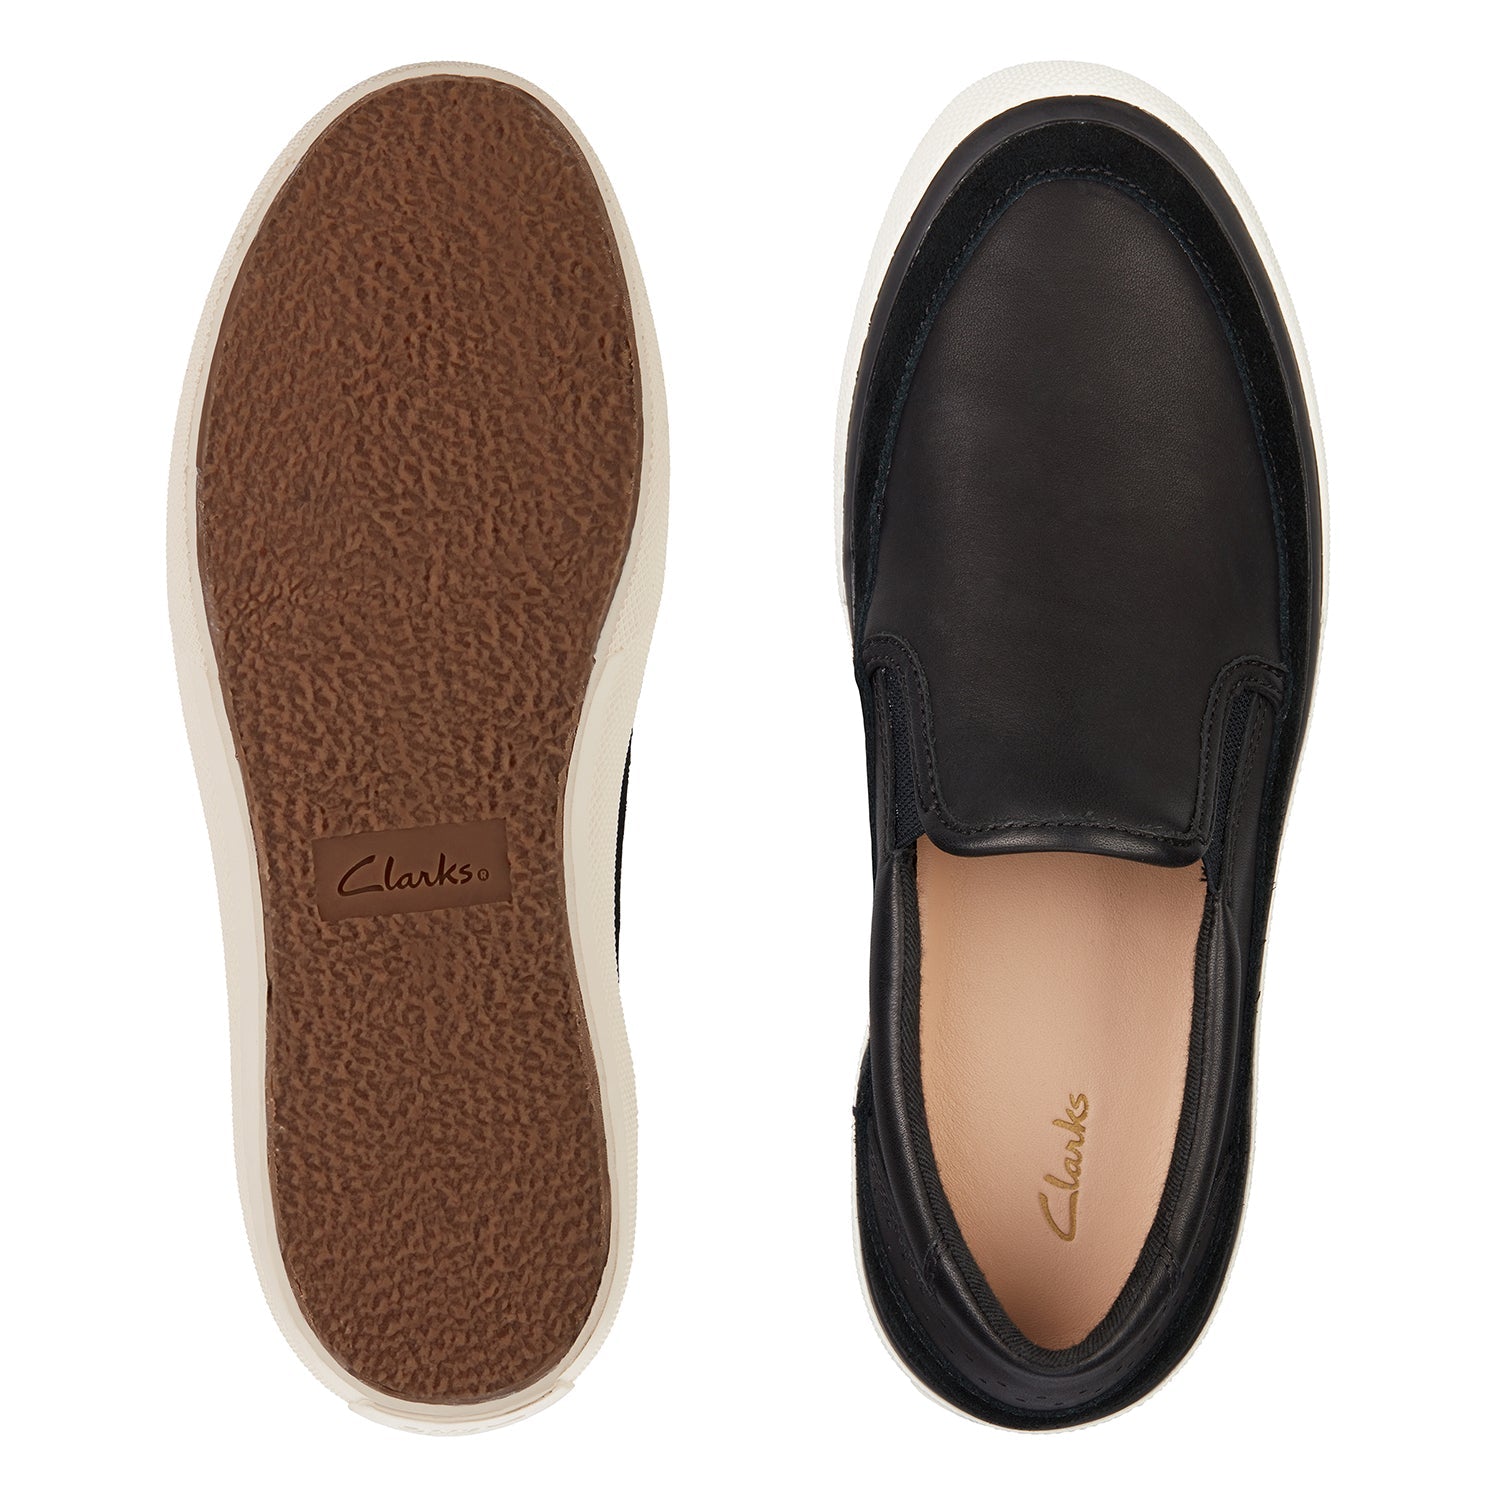 Clarks Aceley Step Shoes - Black Leather - 261609334 - D Width (Standard Fit)